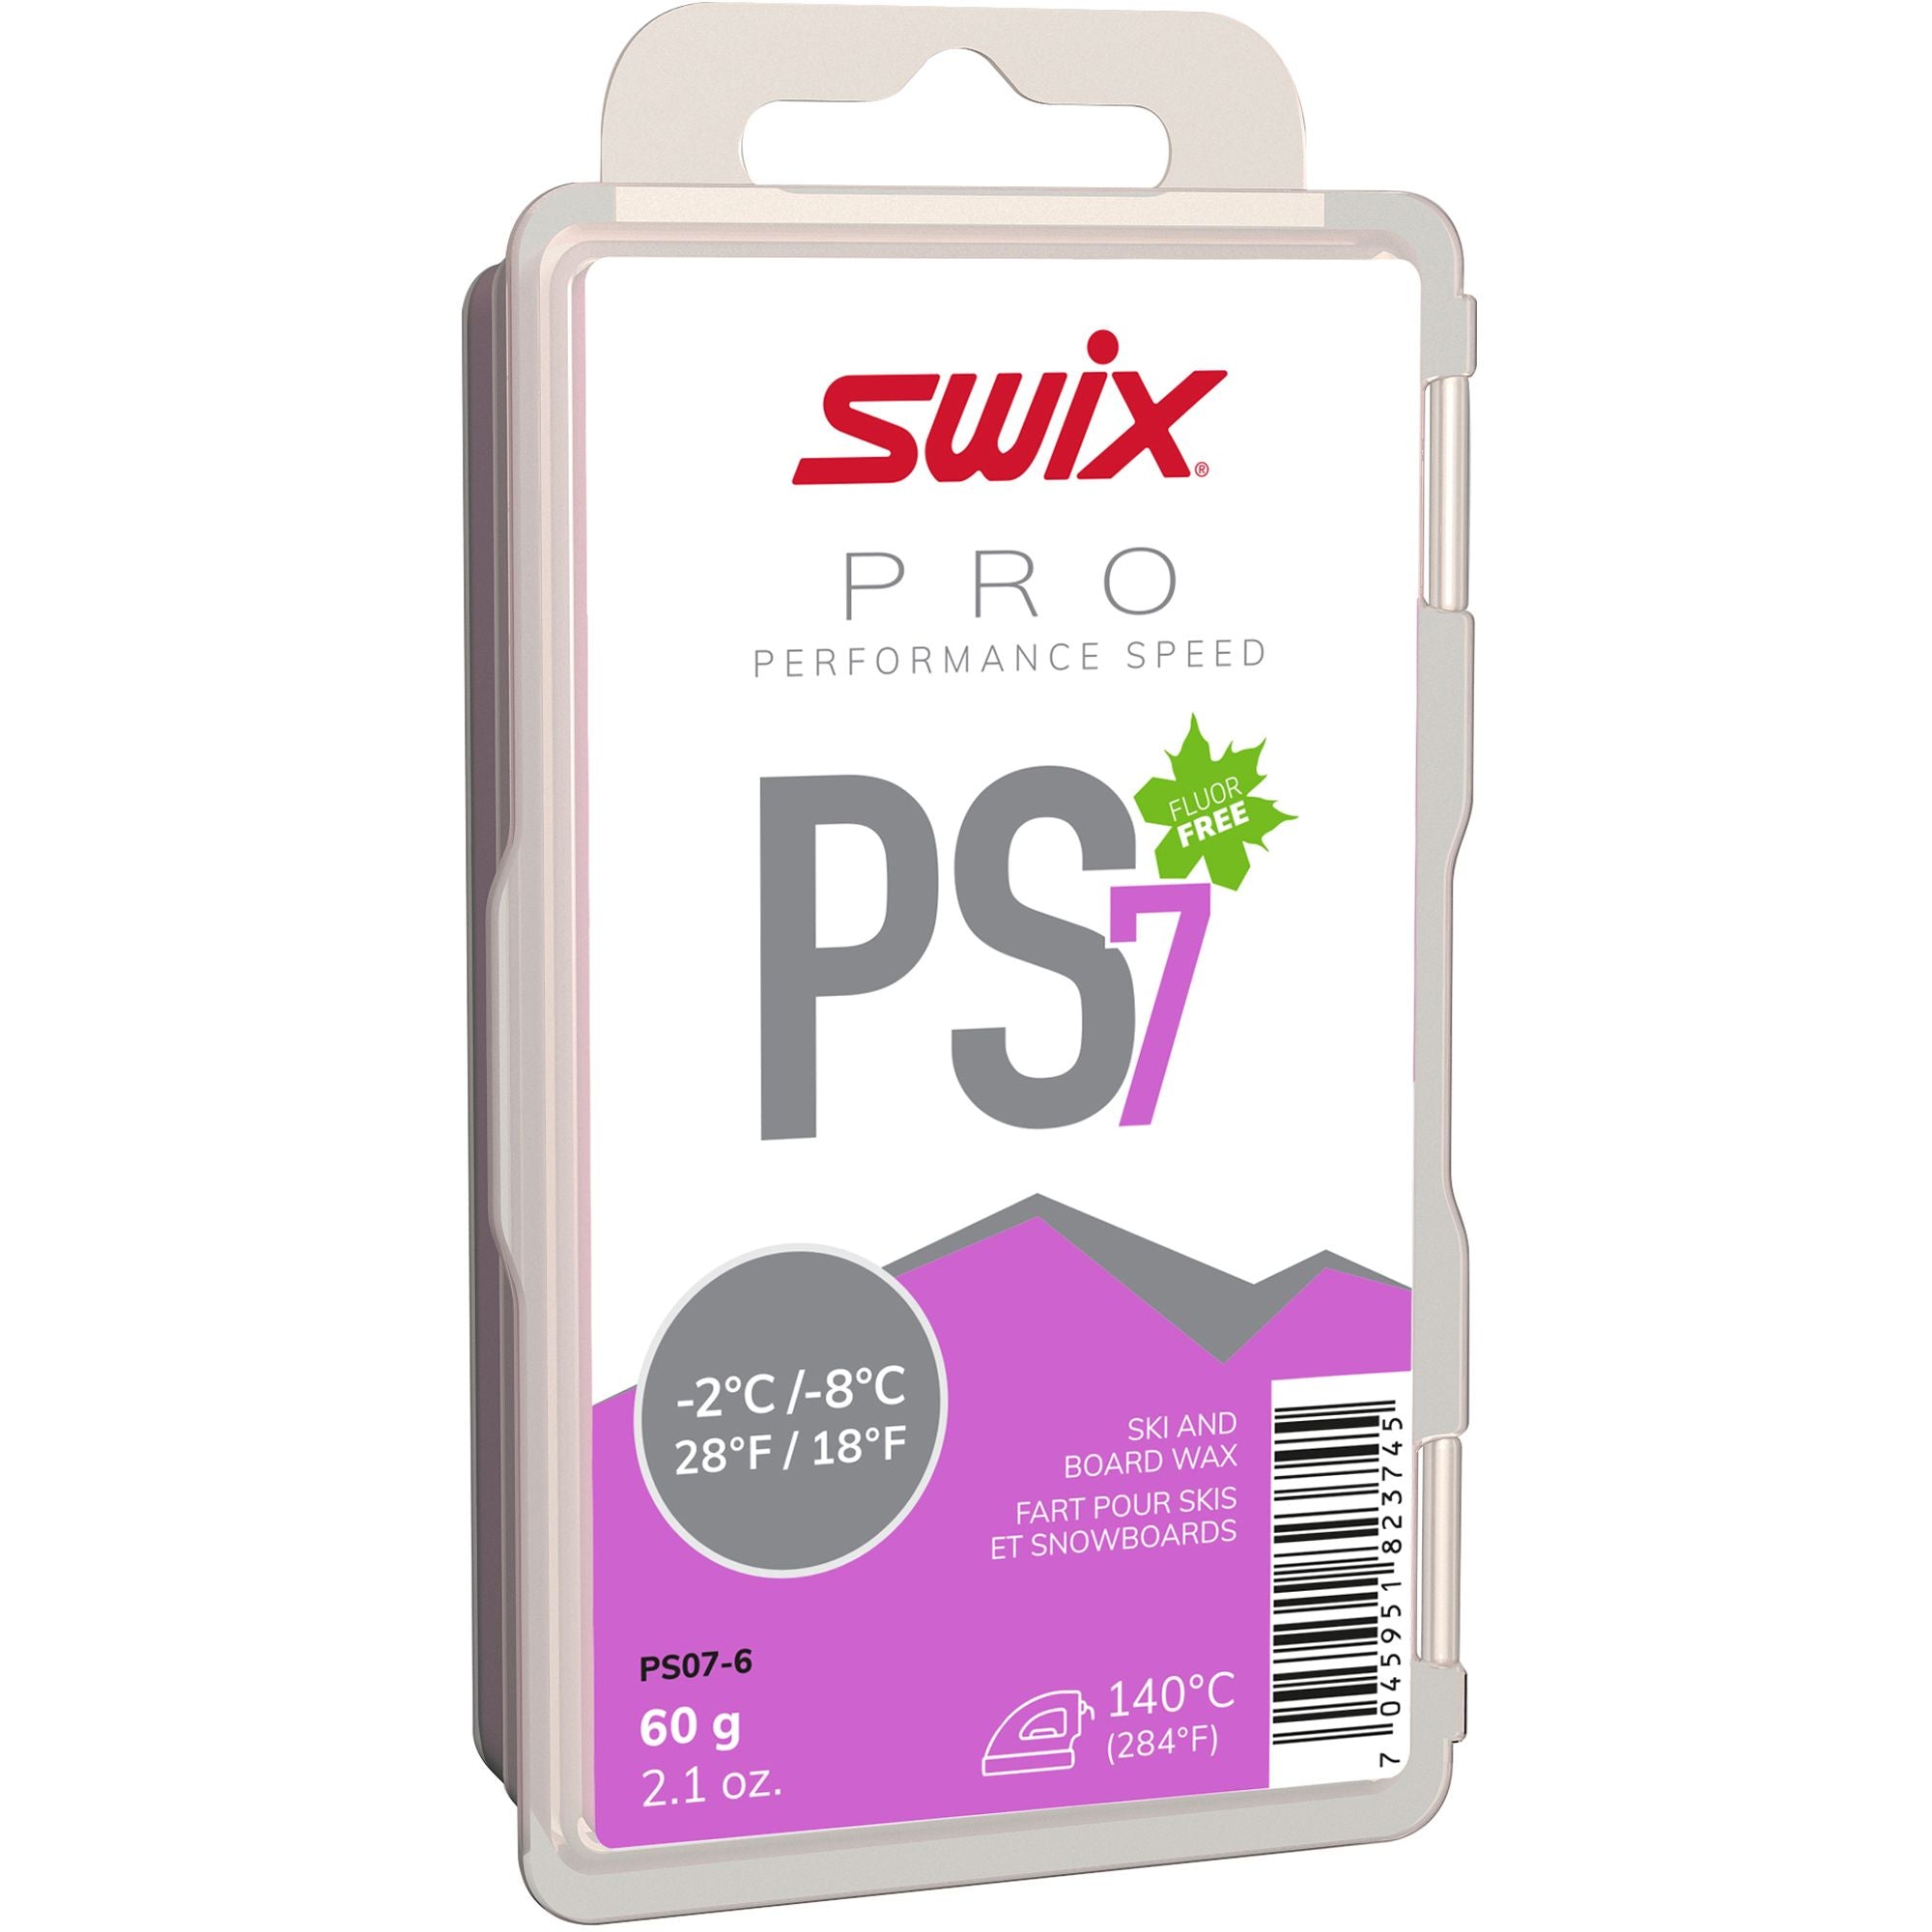 Swix Pro PS7 Violet 60g